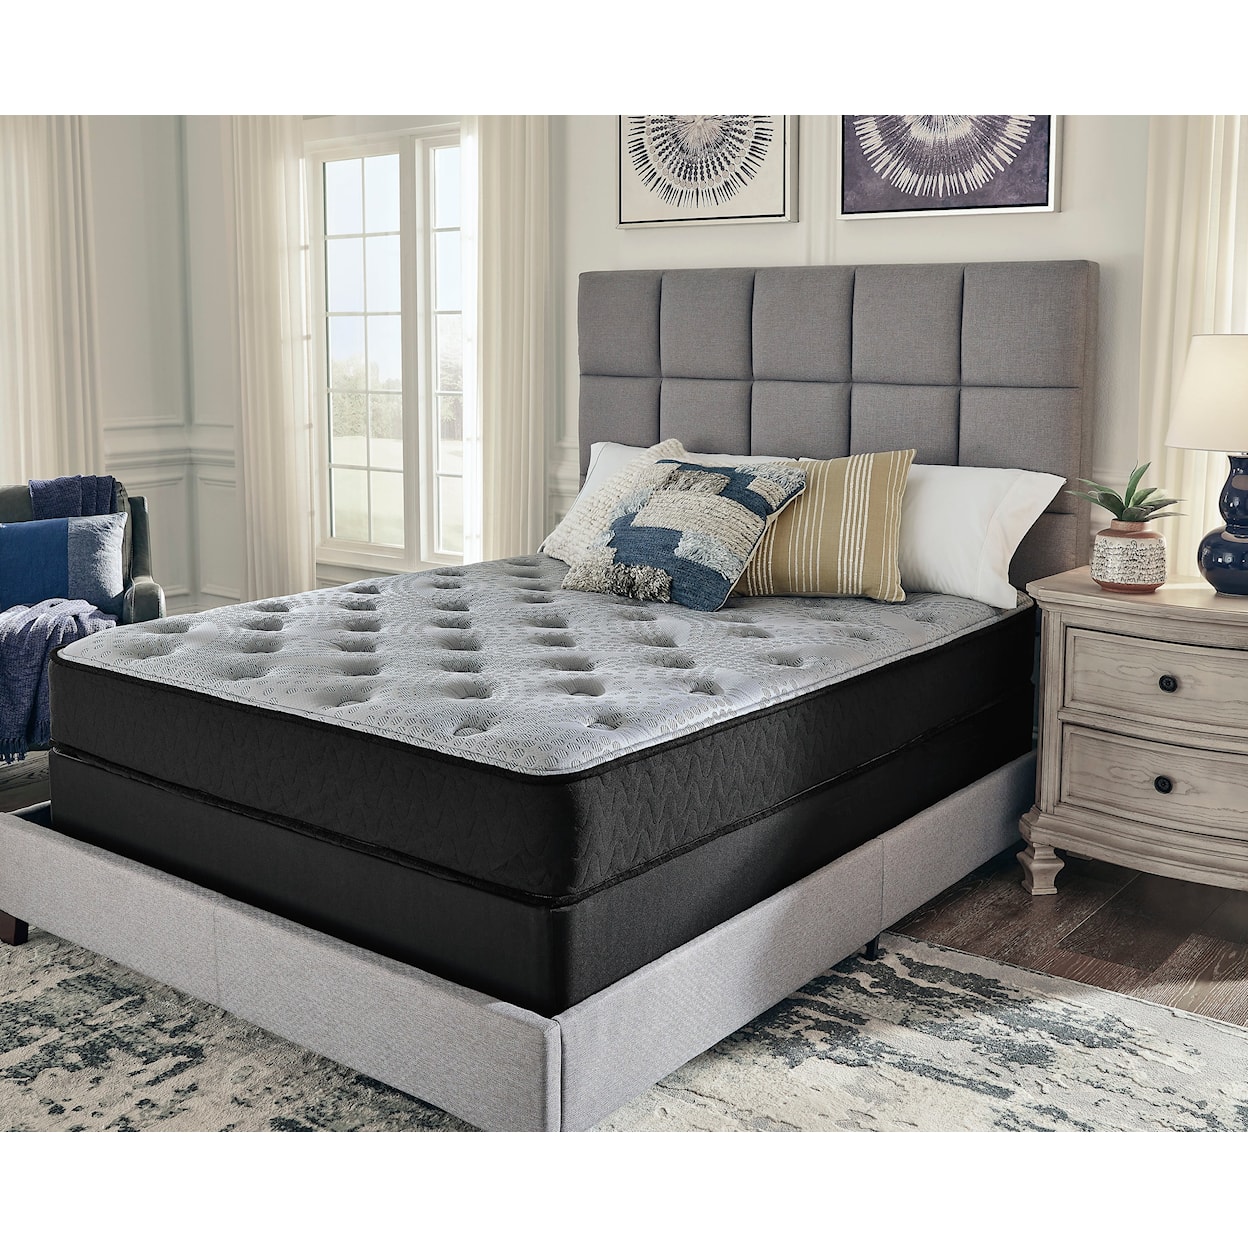 Sierra Sleep Comfort Plus Comfort Plus Full Mattress